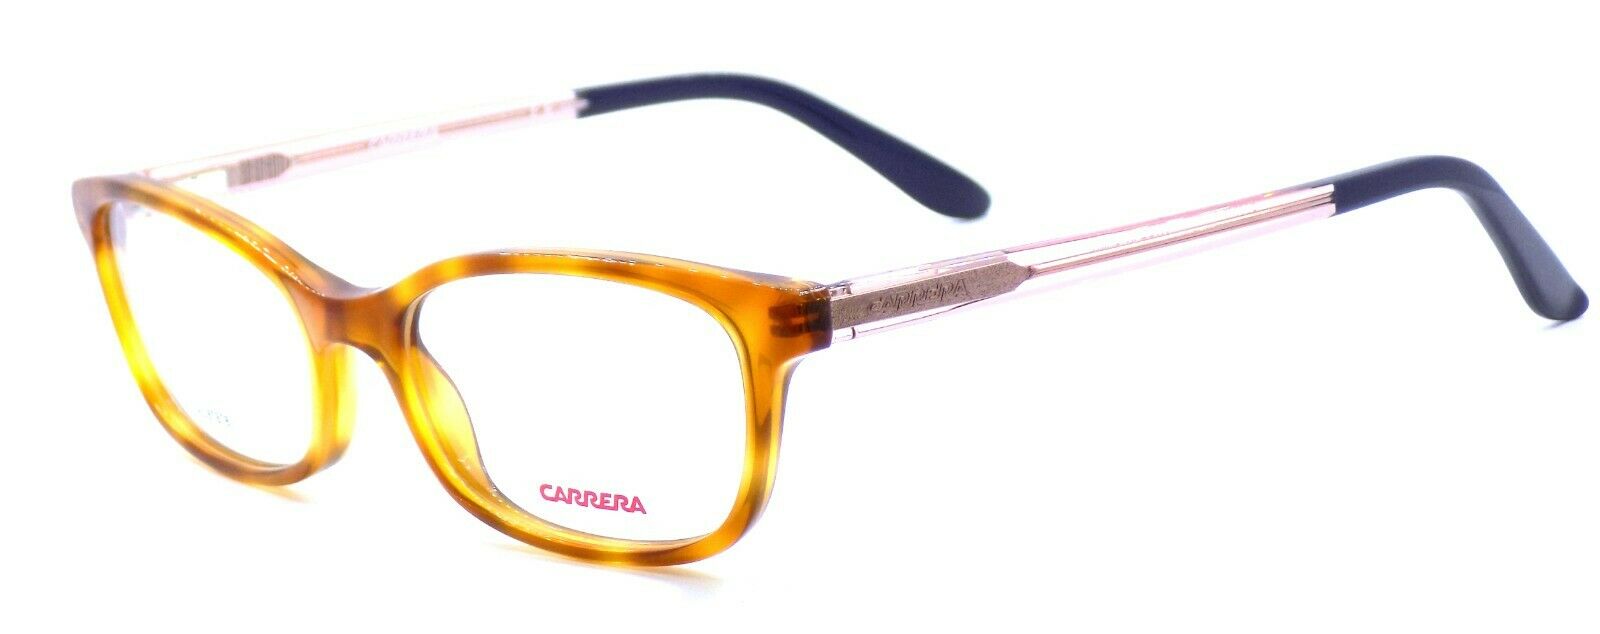 1-Carrera CA6647 QKX Women's Eyeglasses Frames 50-17-140 Havana / Peach + CASE-762753670151-IKSpecs